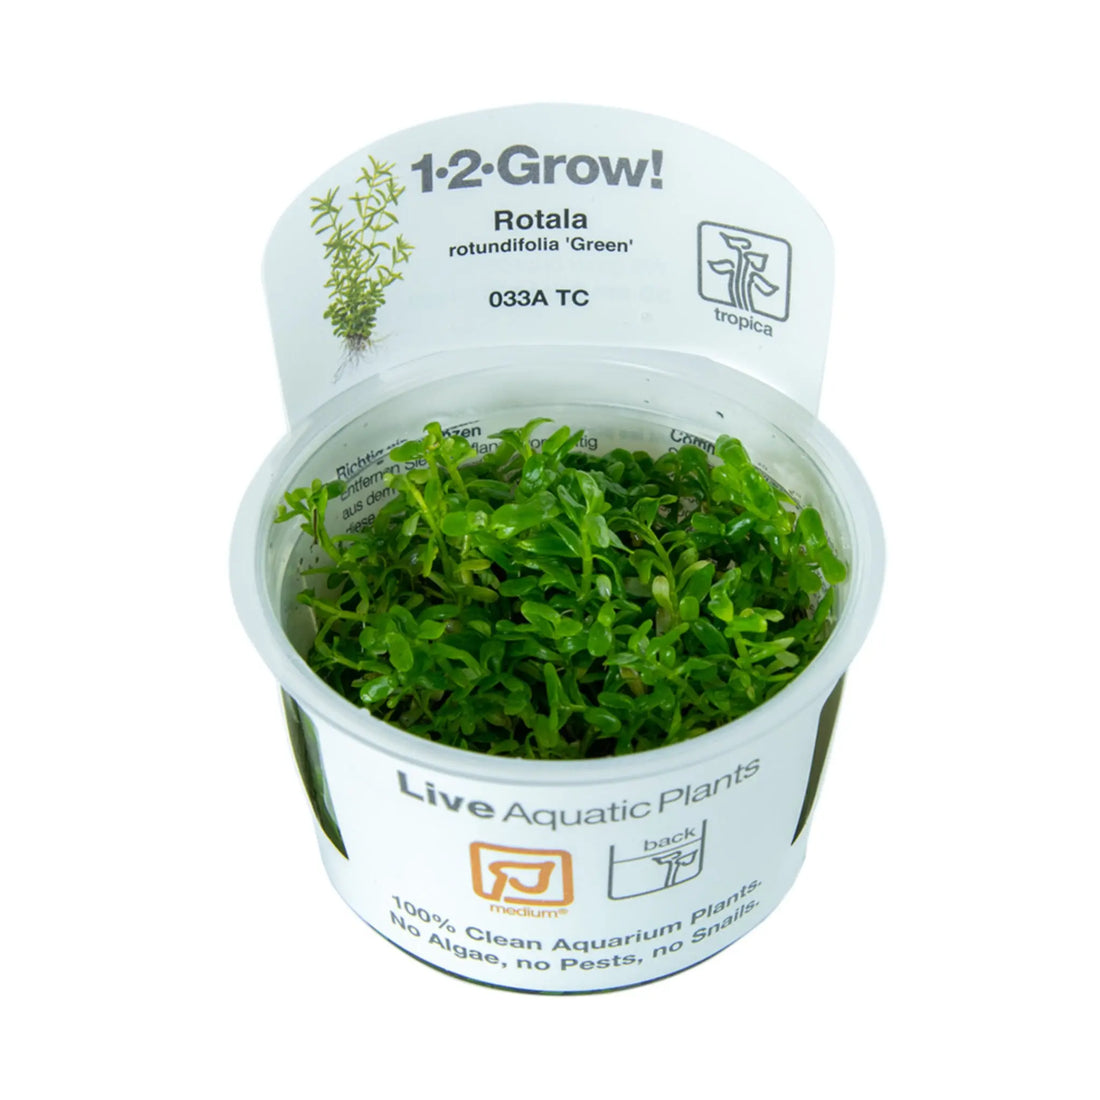 Tropica Rotala rotundifolia green 1-2-GROW - Aqua Essentials